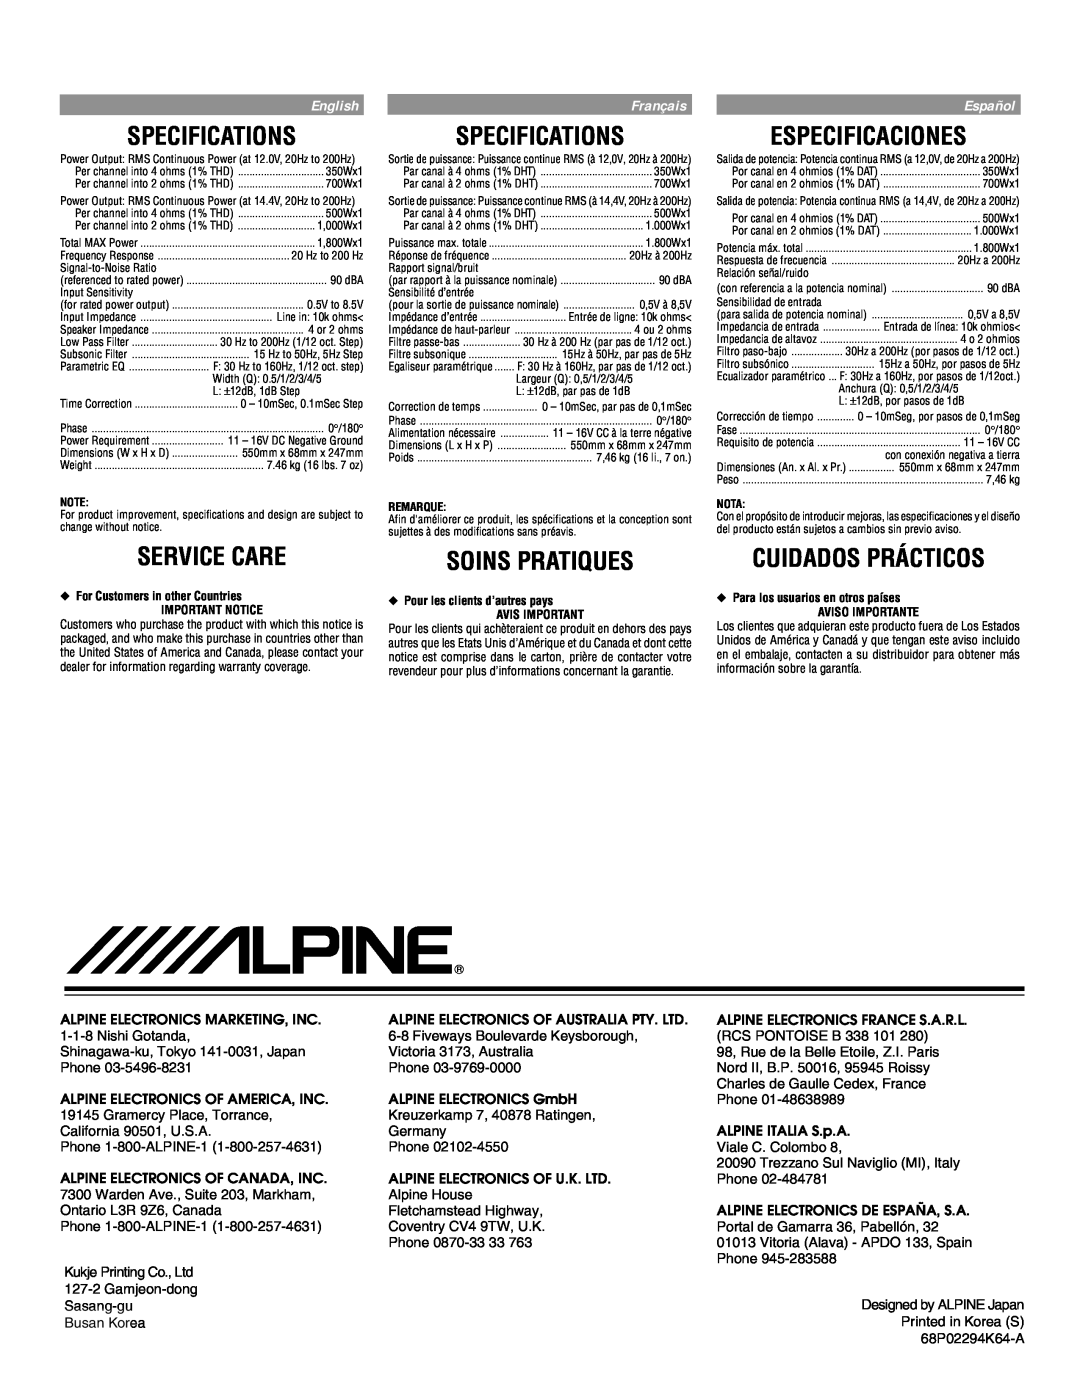 Alpine MRD-M1000 Specifications, Especificaciones, Service Care, Soins Pratiques, Cuidados Prácticos, English, Français 